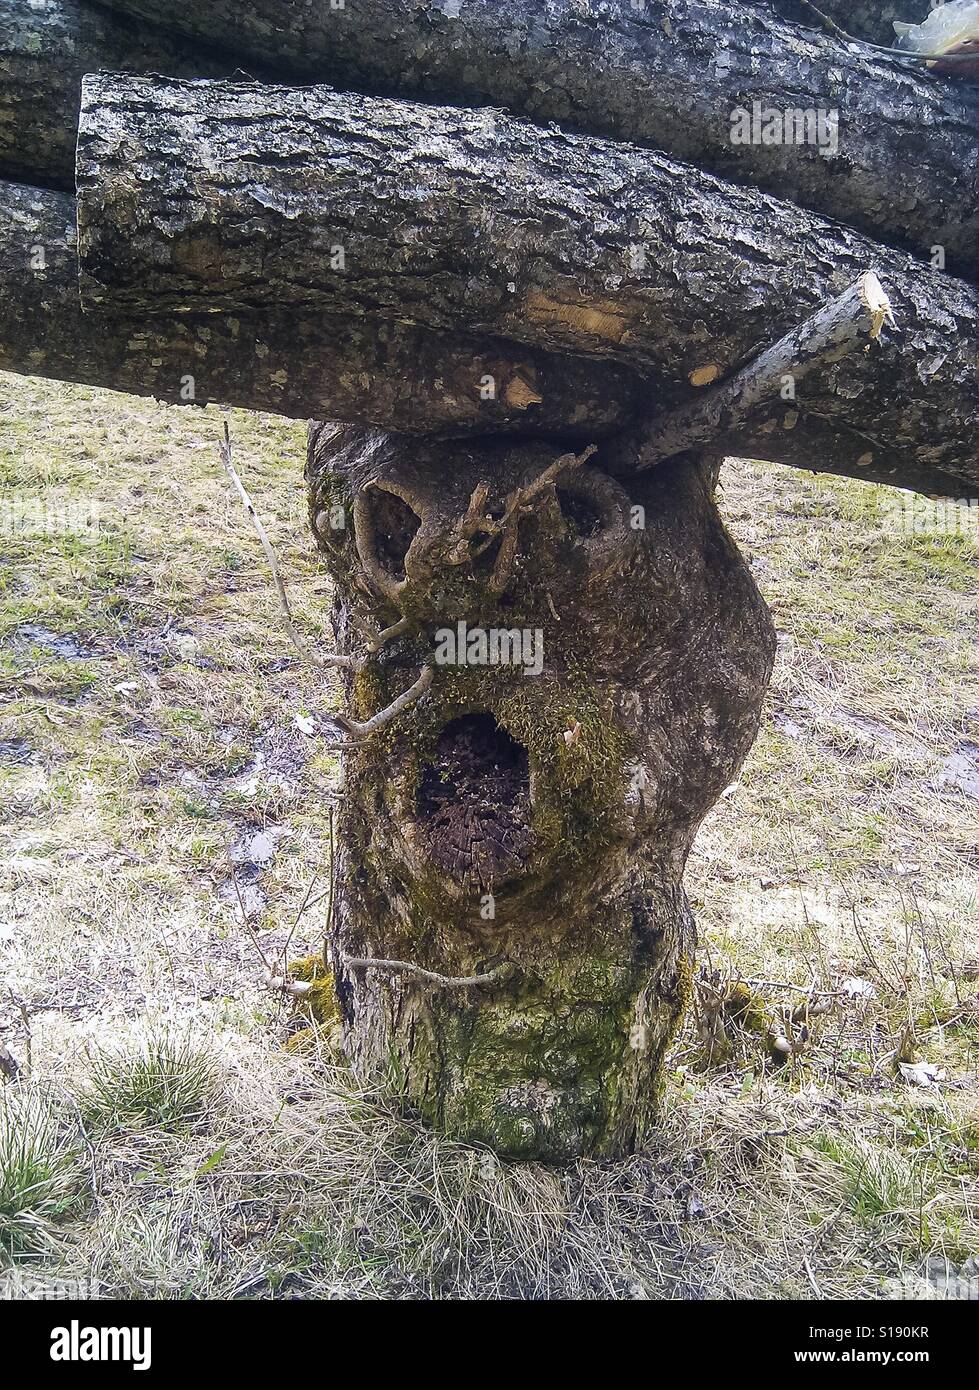 Weird tree stumb with human face. Stock Photo